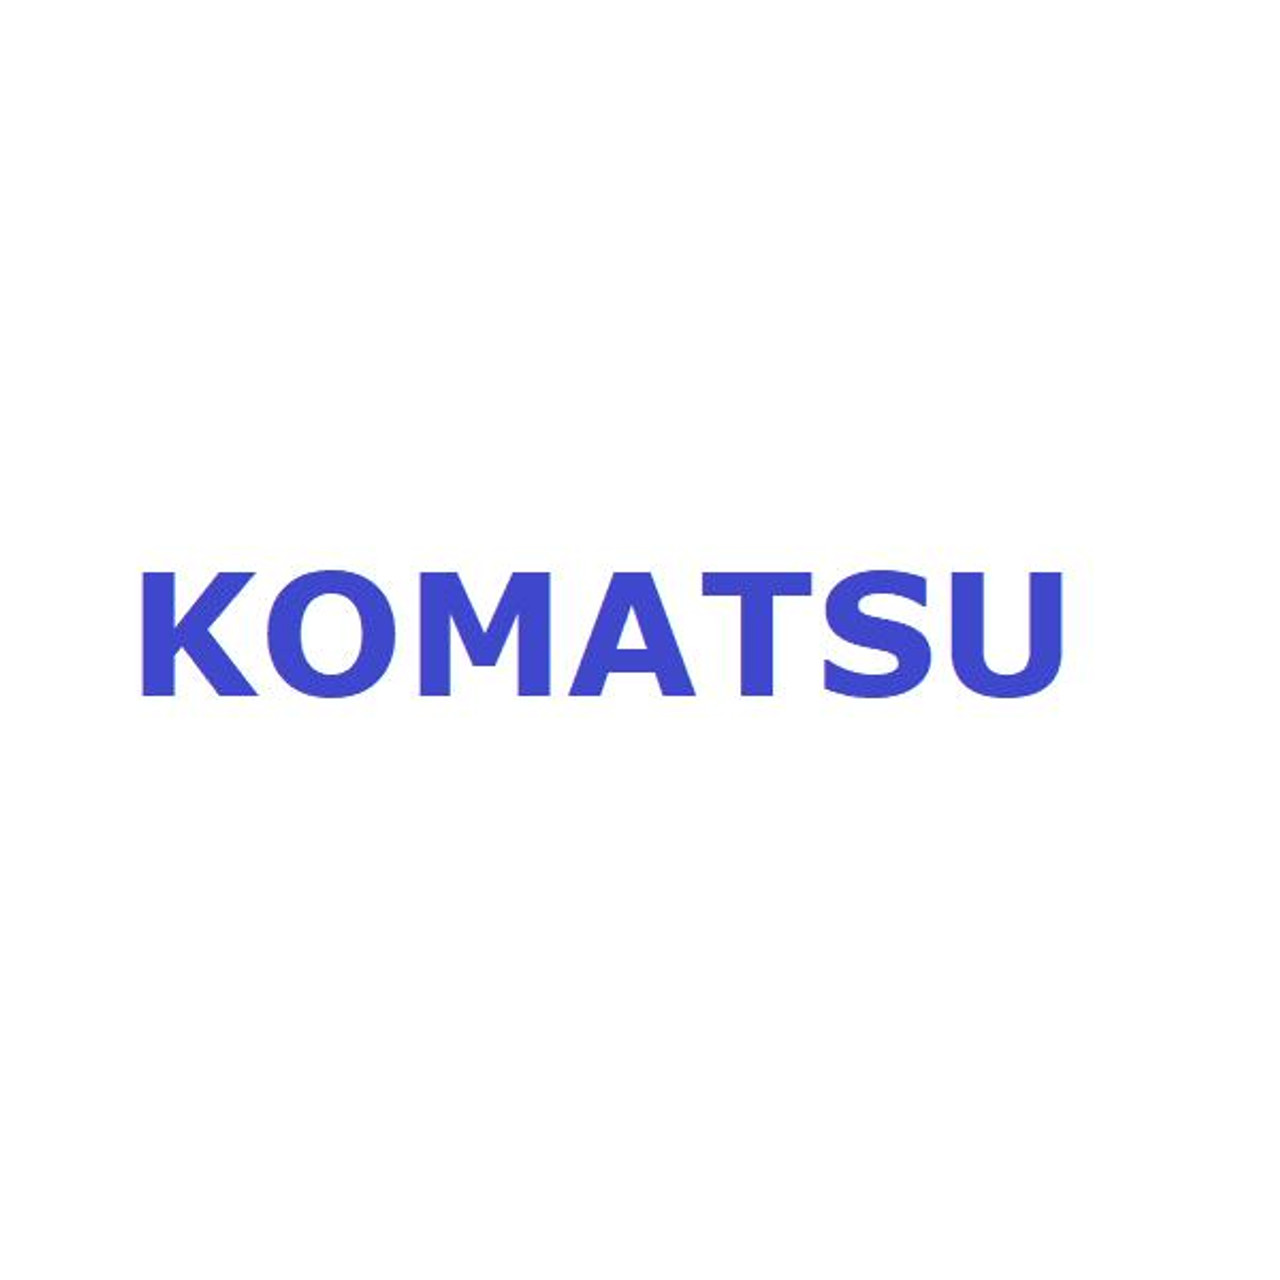 Komatsu Seal # 707-99-34240 fits Cylinder 55 x 105mm